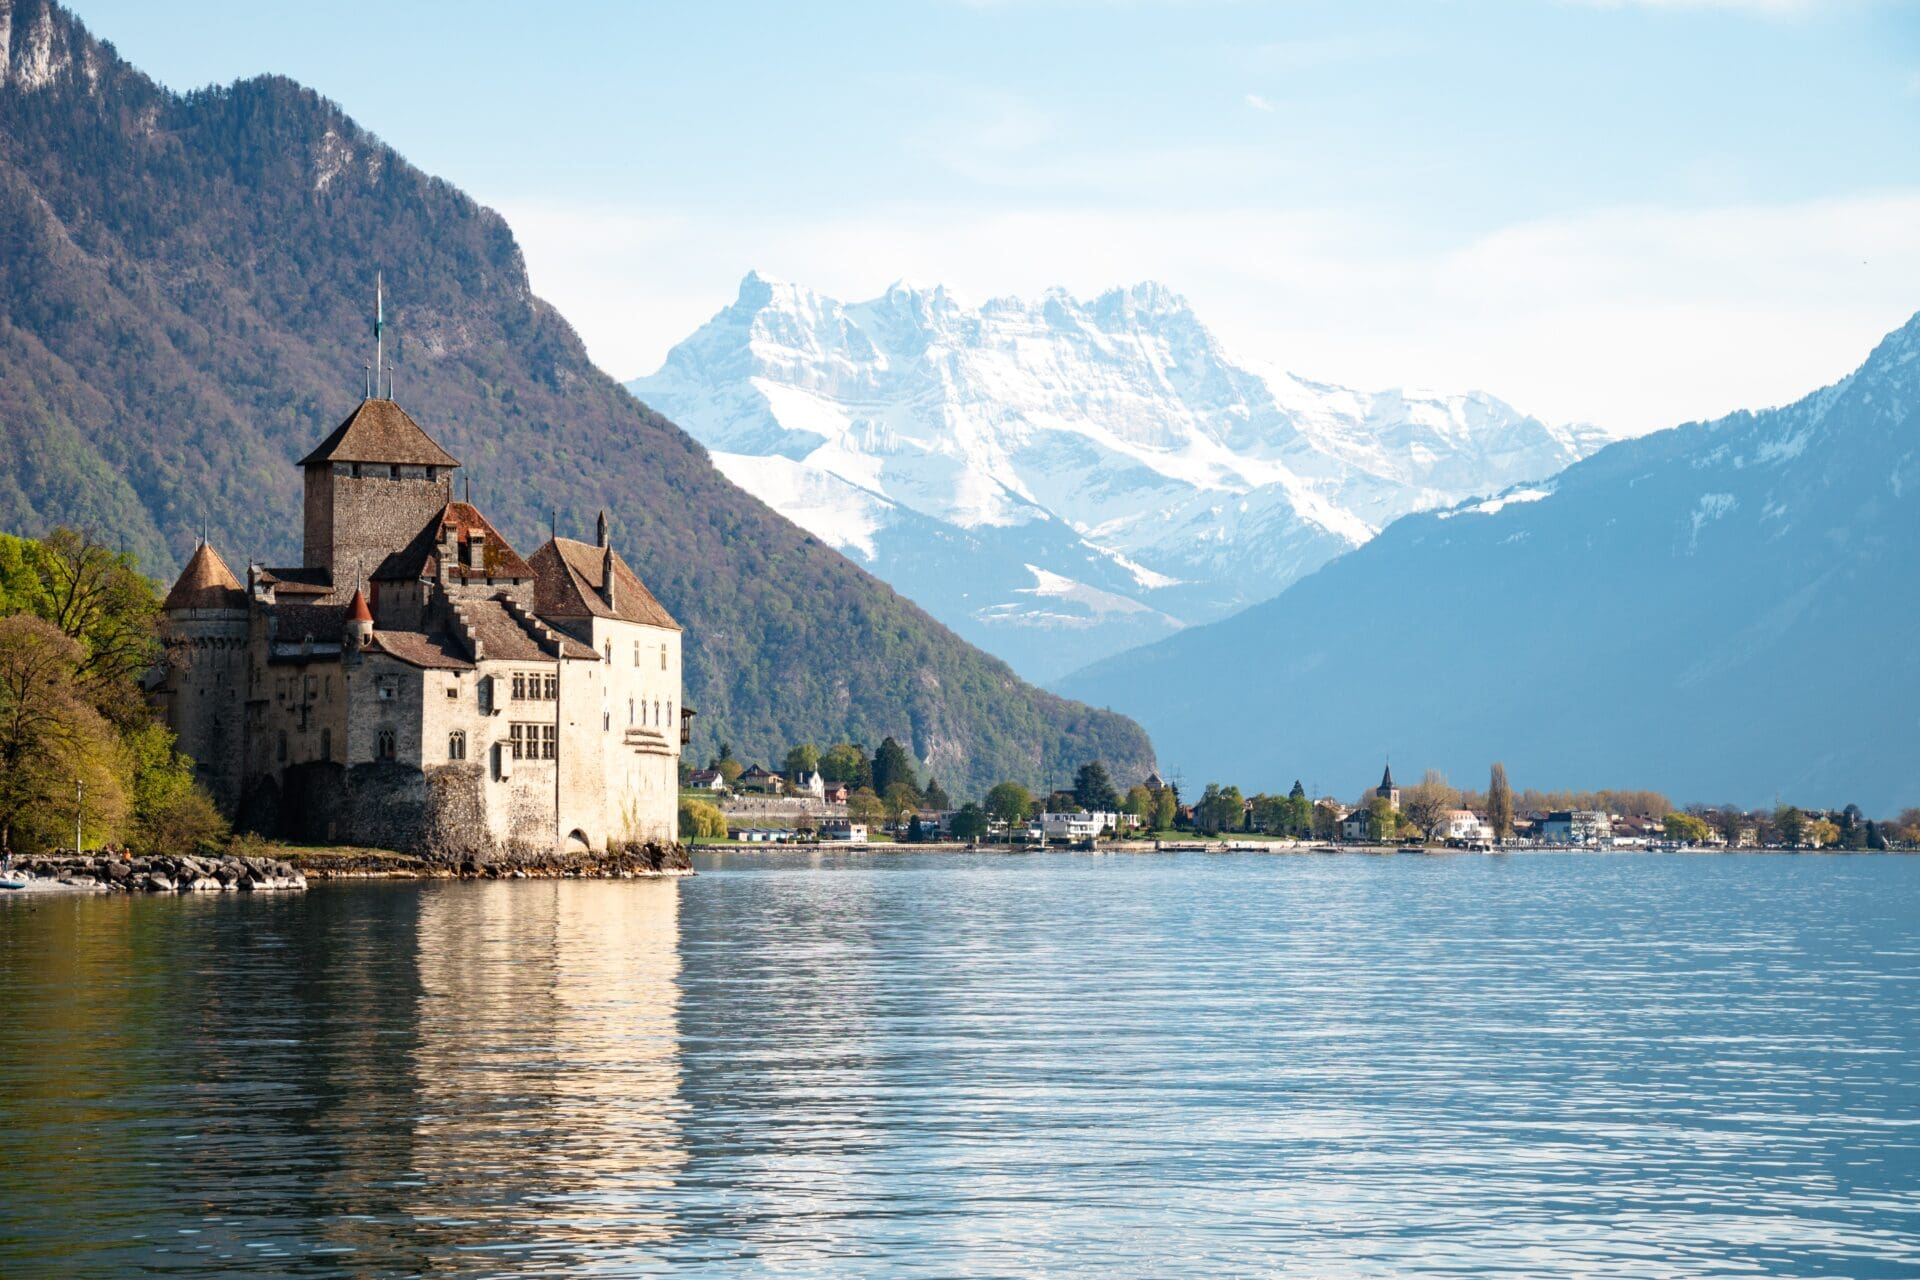 Train travel through Switzerland | Montreux castle against snowy mountains and Lake Geneva